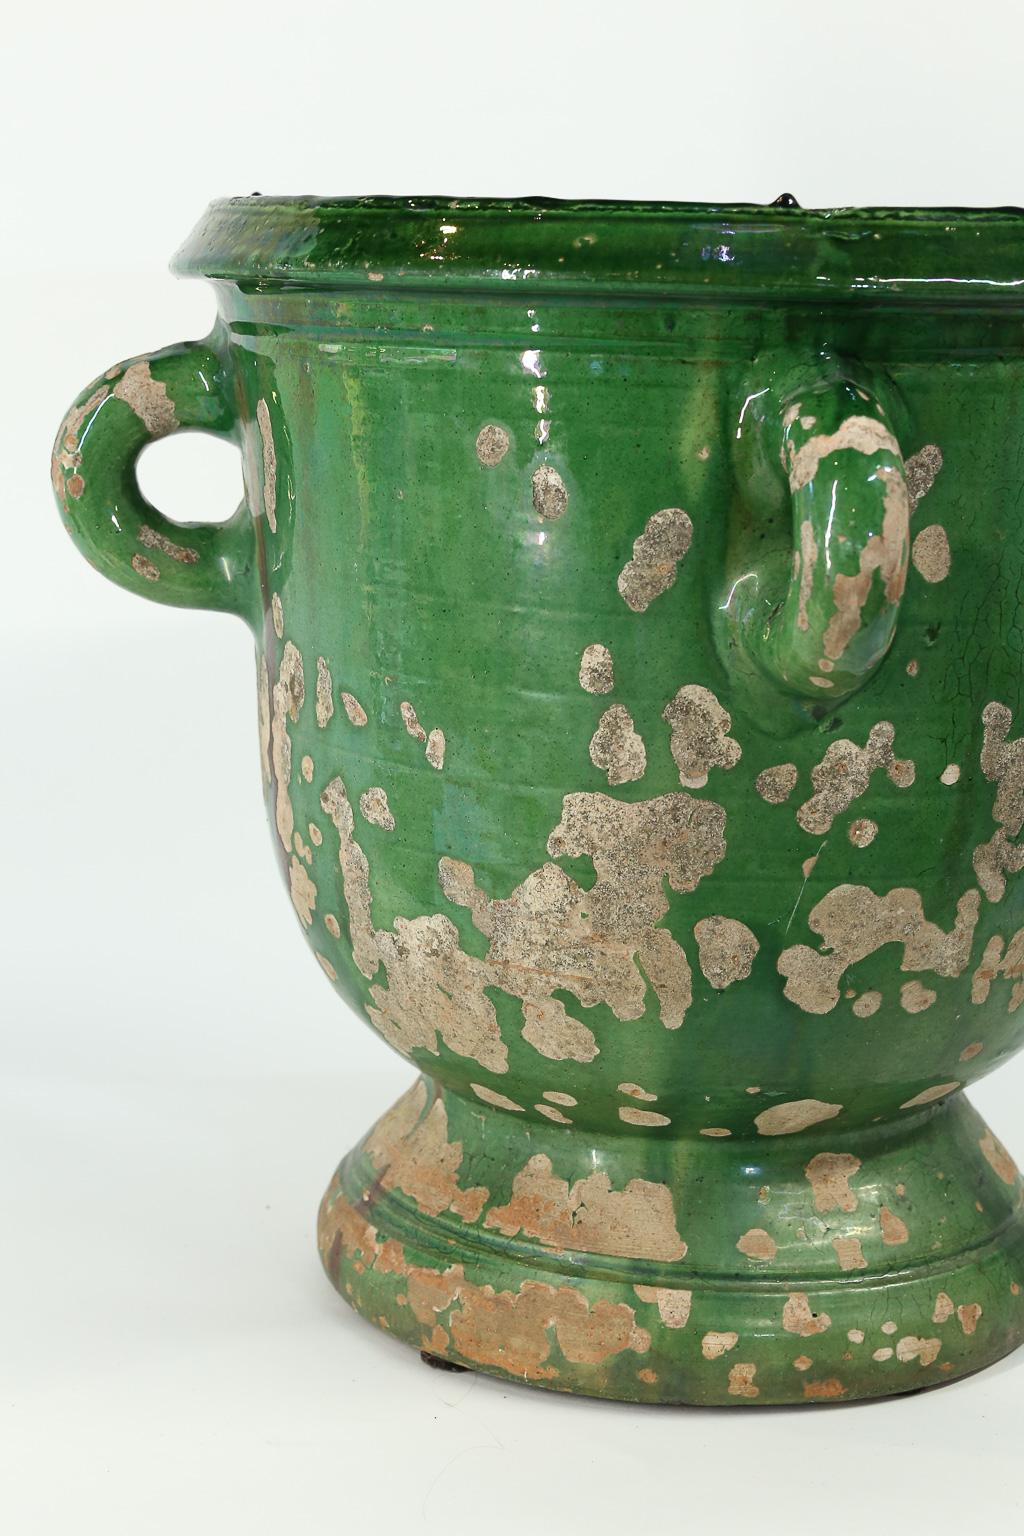 Pottery Glazed Terracotta Planter from Anduze, France